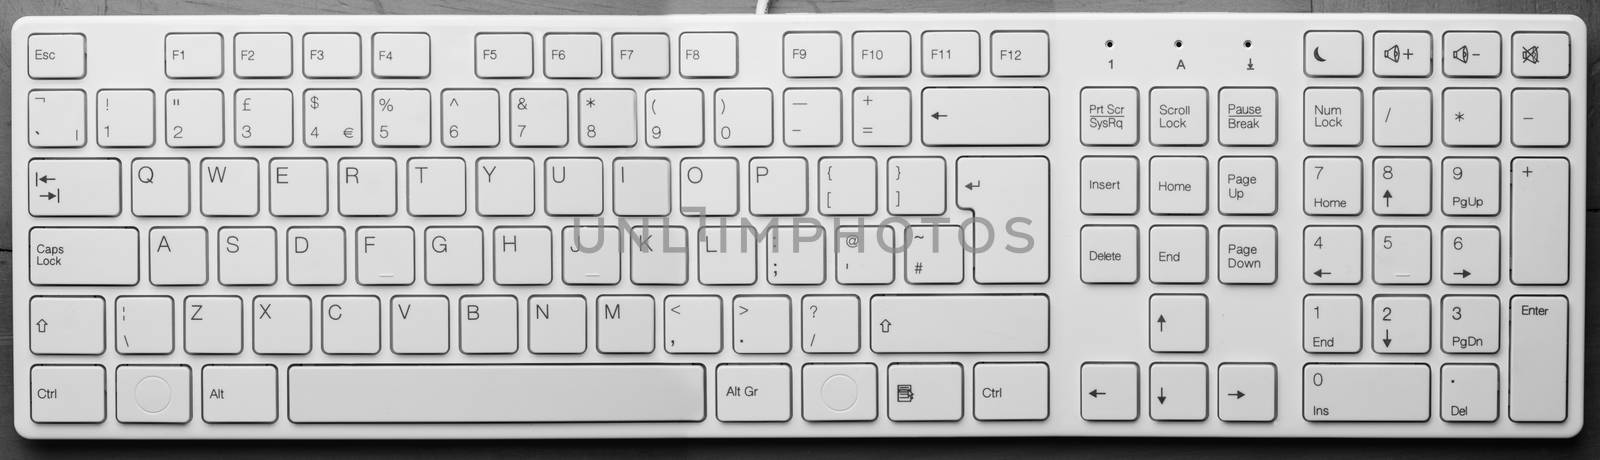 White keyboard by Wavebreakmedia